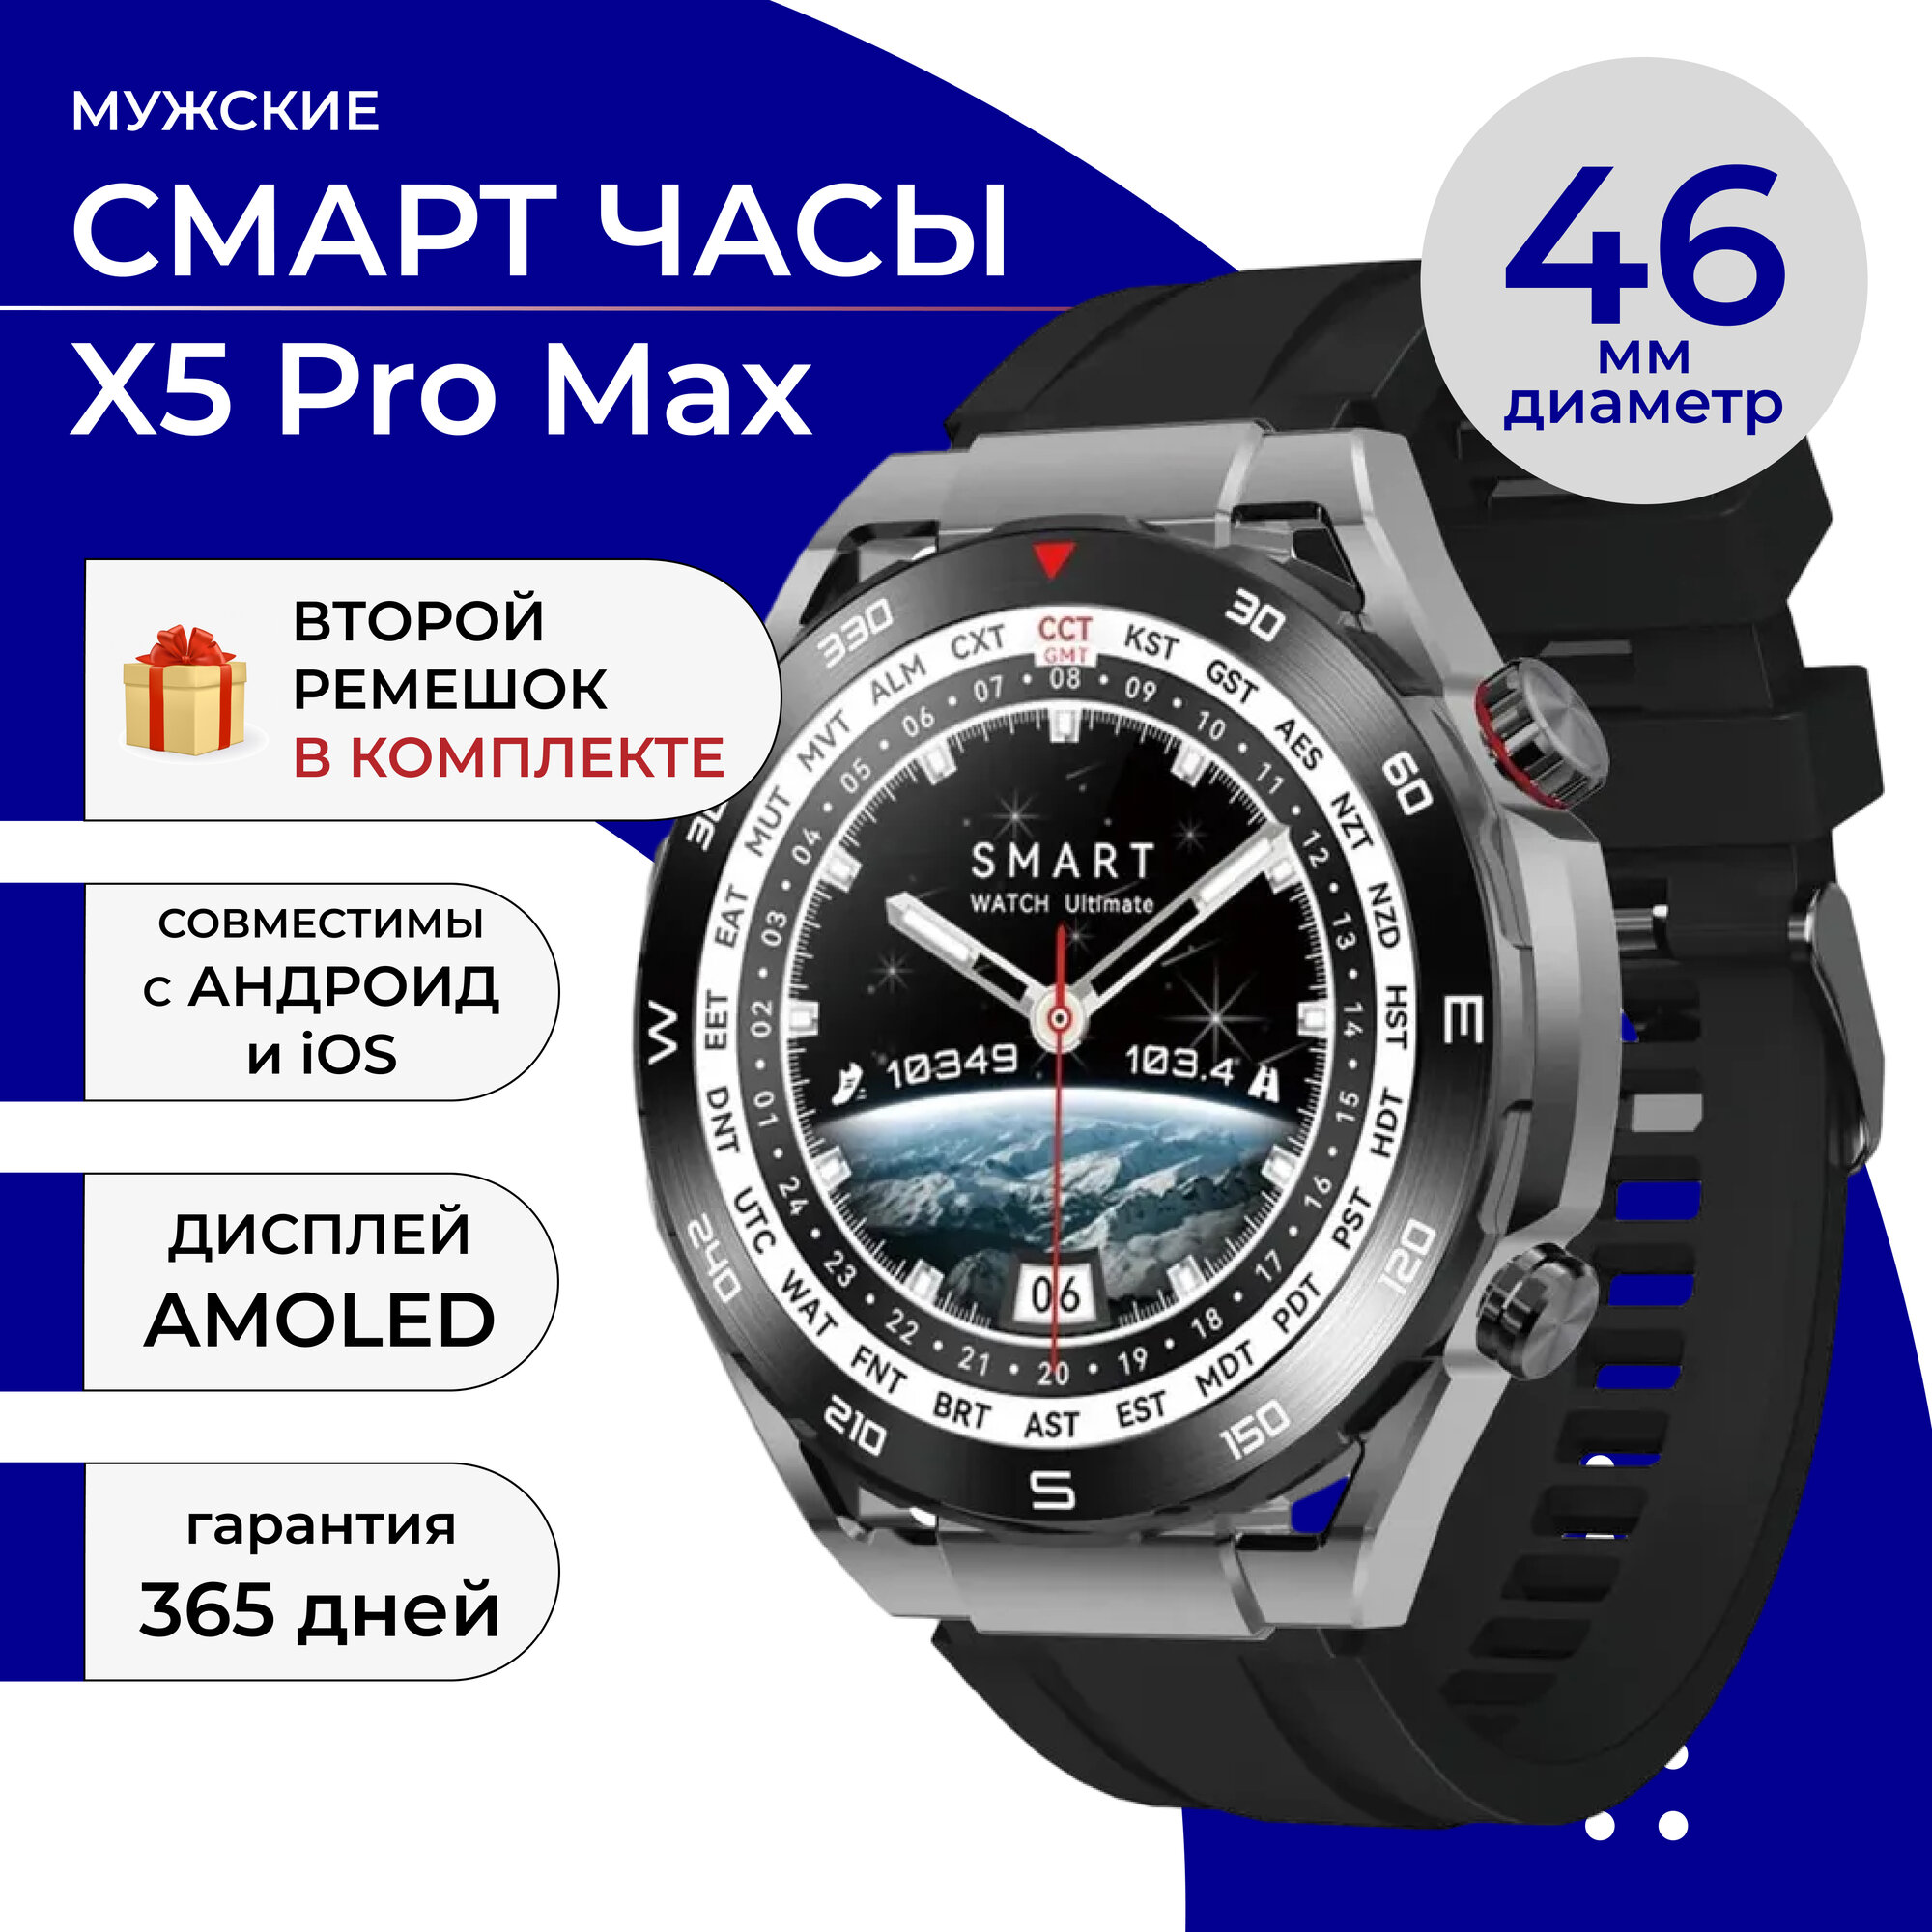 Cмарт часы наручные X5 Pro Max